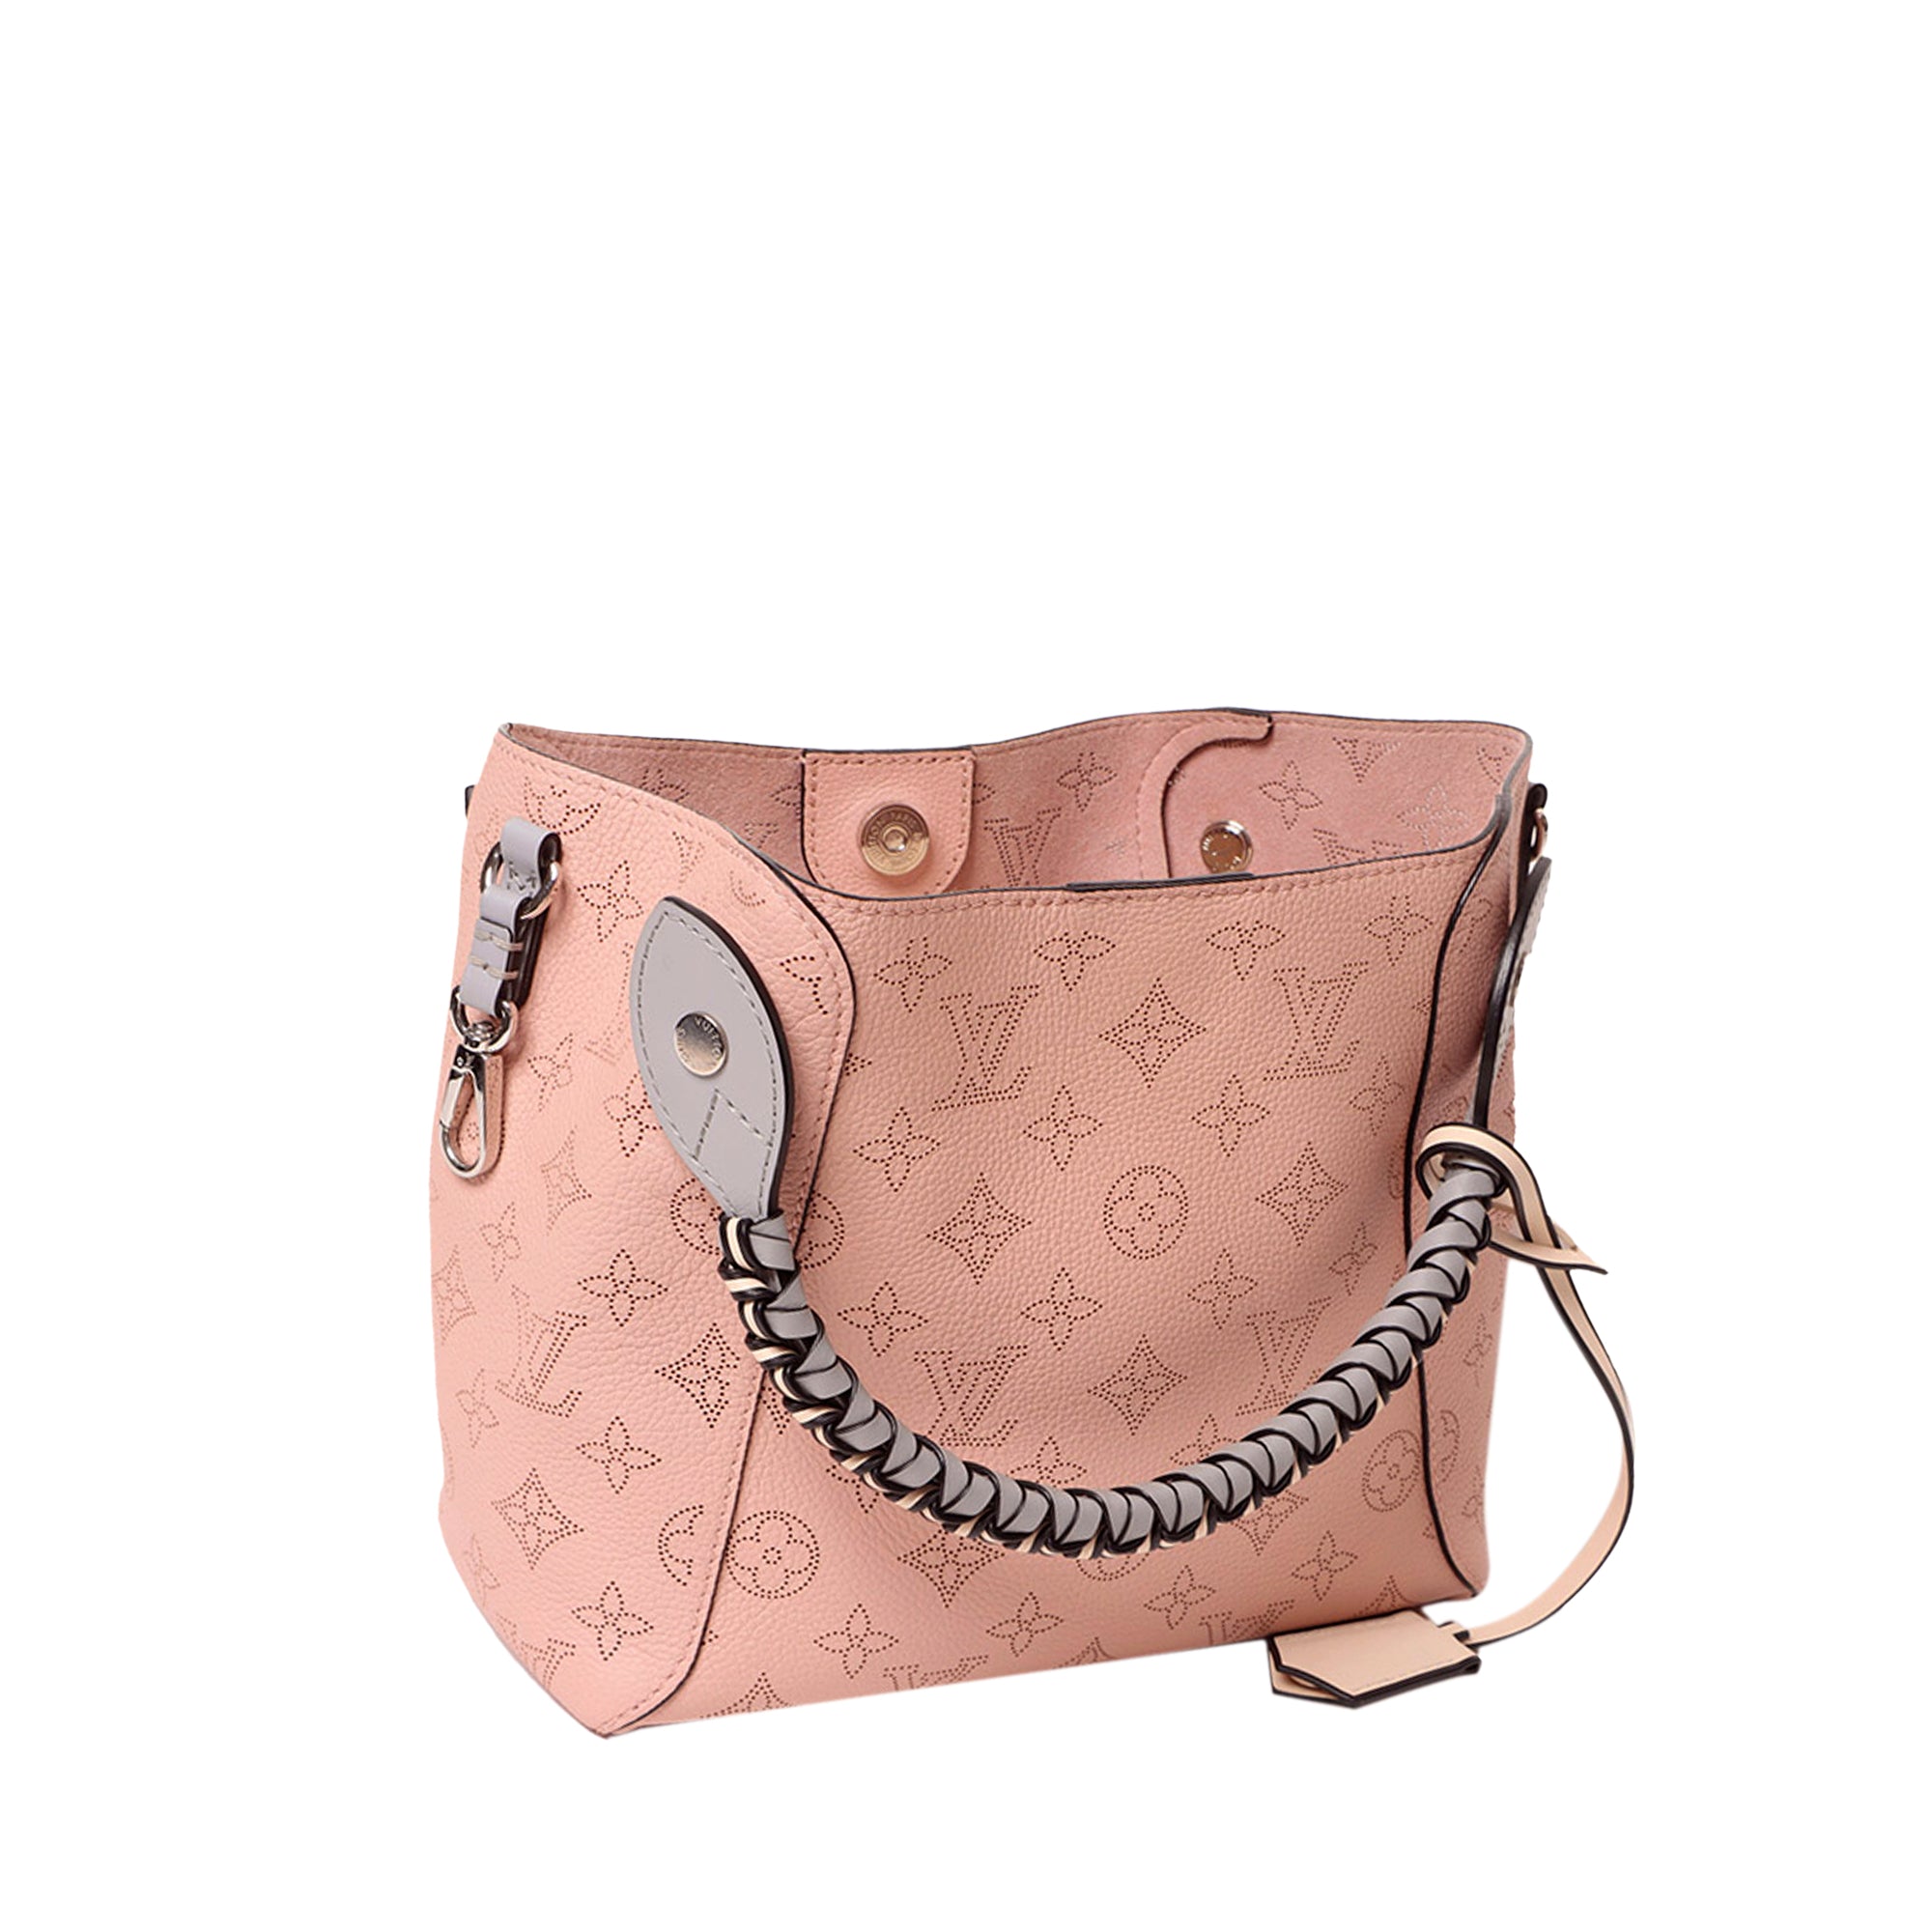 LOUIS VUITTON Key Pouch Mahina Magnolia Pink Coin Holder Bag Charm